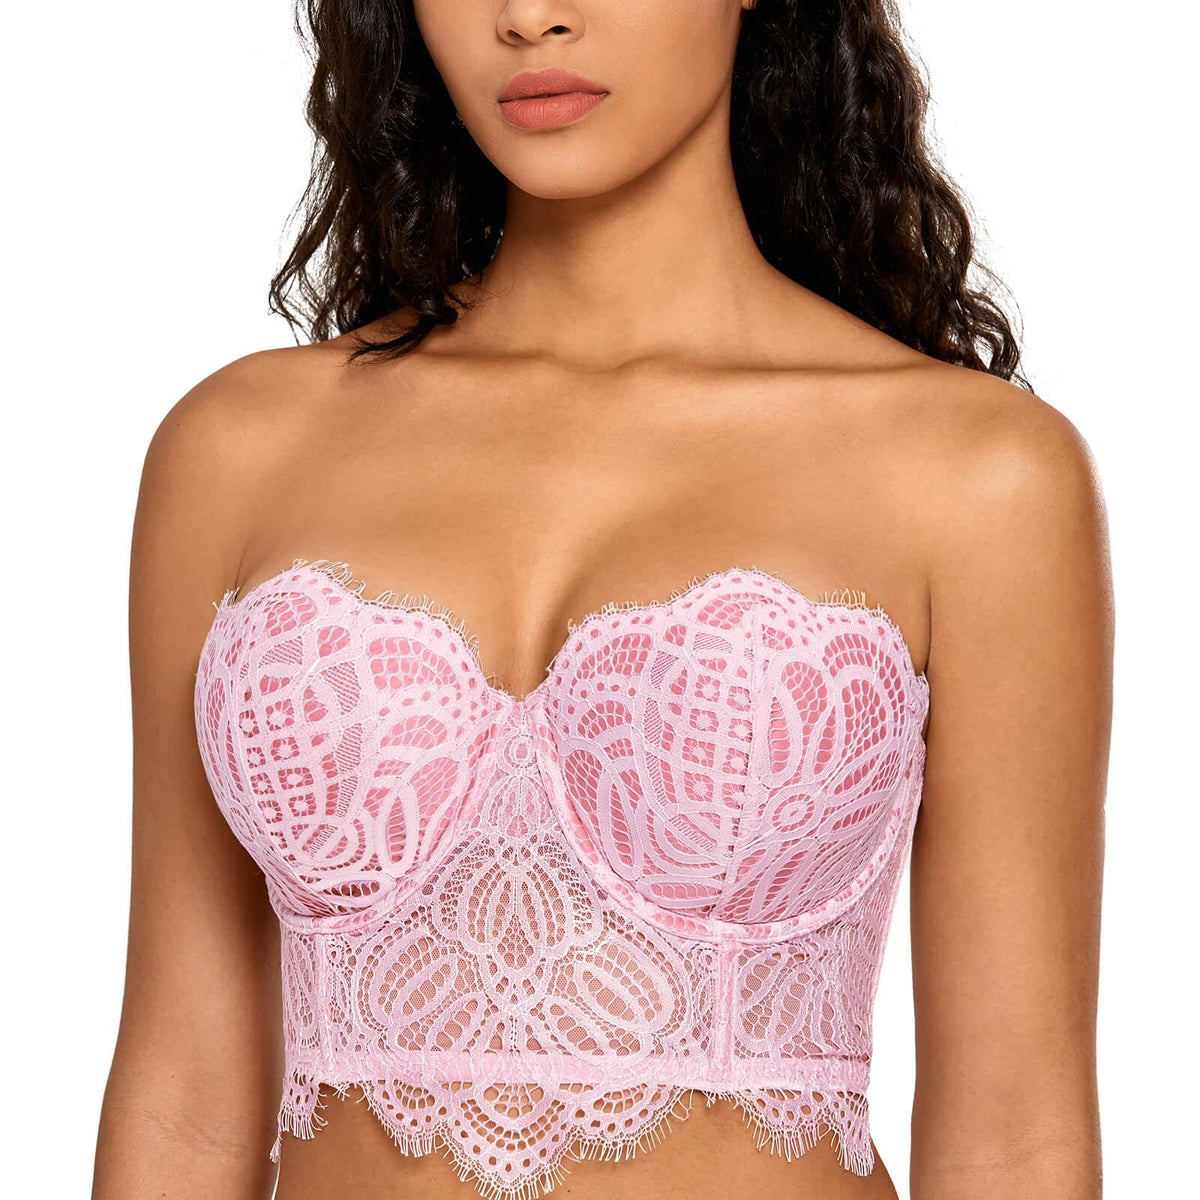 Victoria's Secret Dream Angels Strapless Bra - Size 32D - clothing